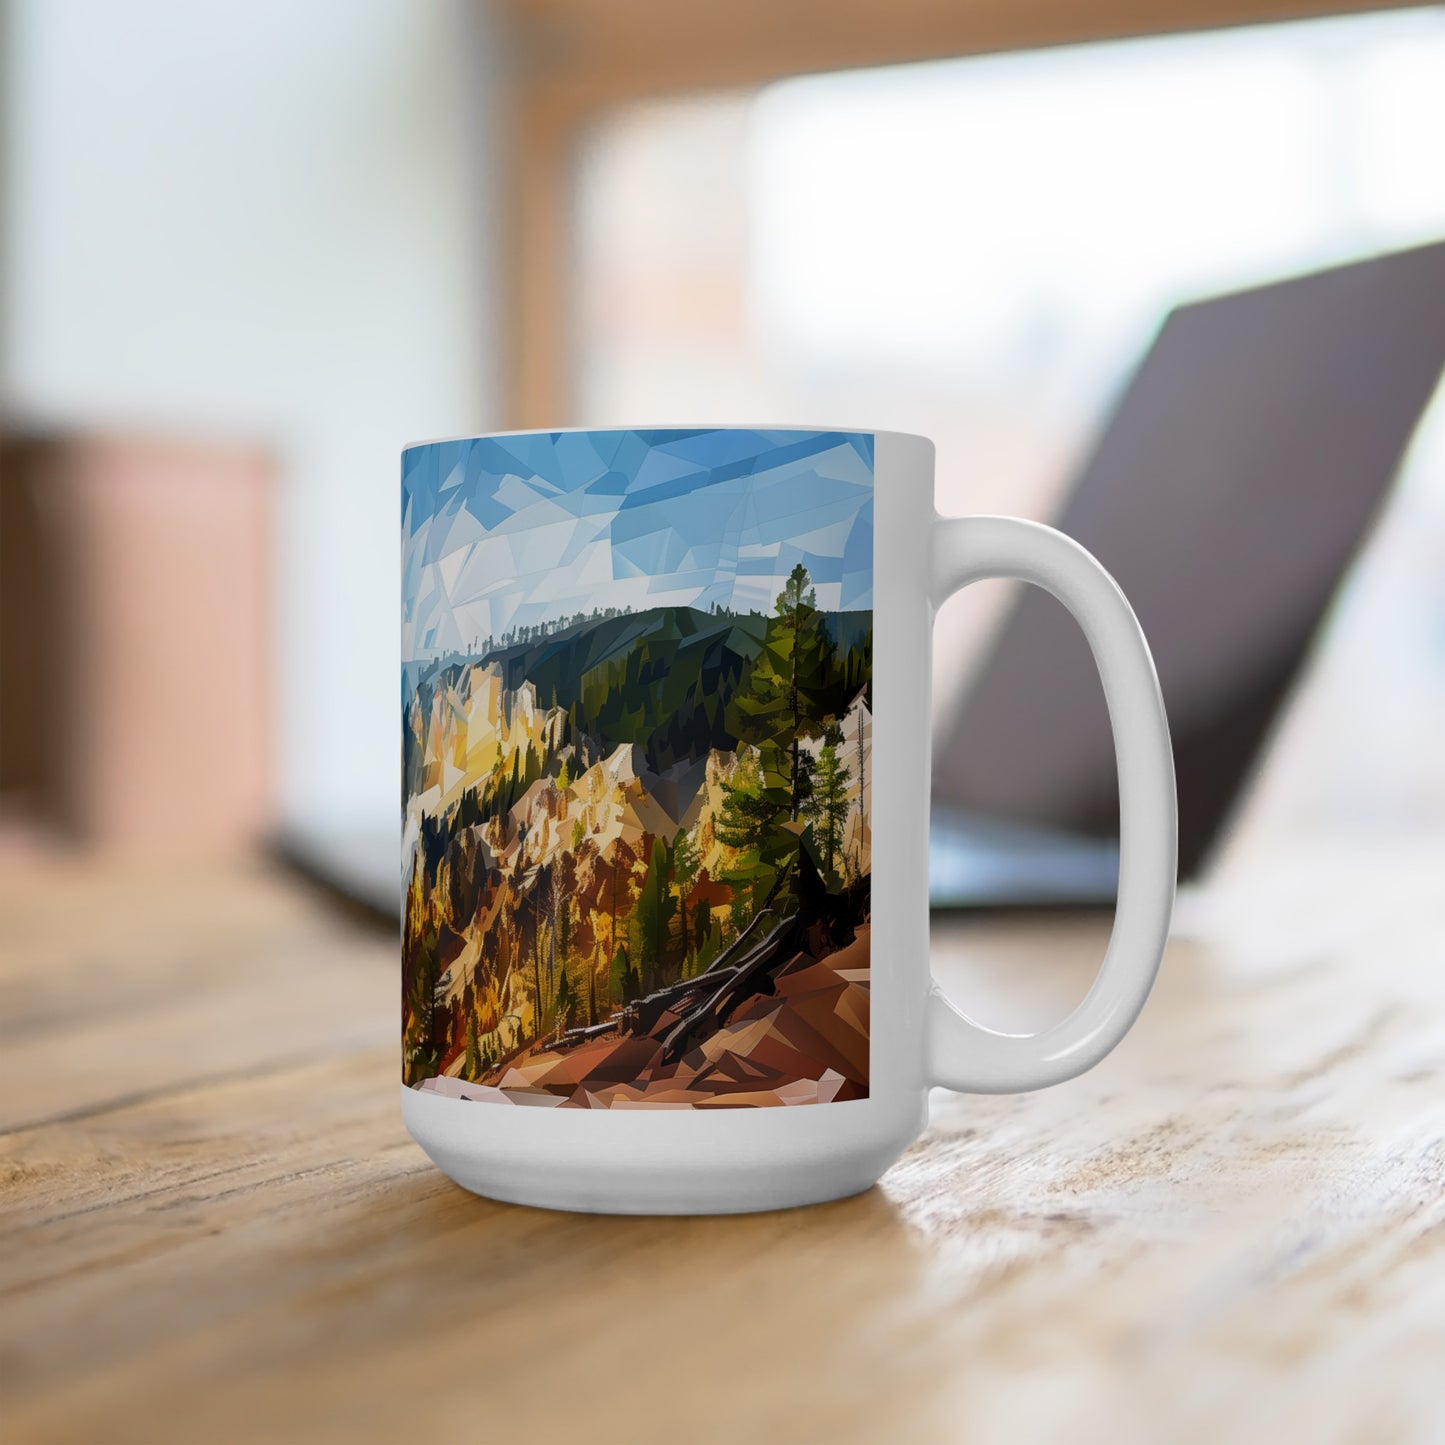 Large Collectible Coffee Mug with Yellowstone National Park Design, 15oz